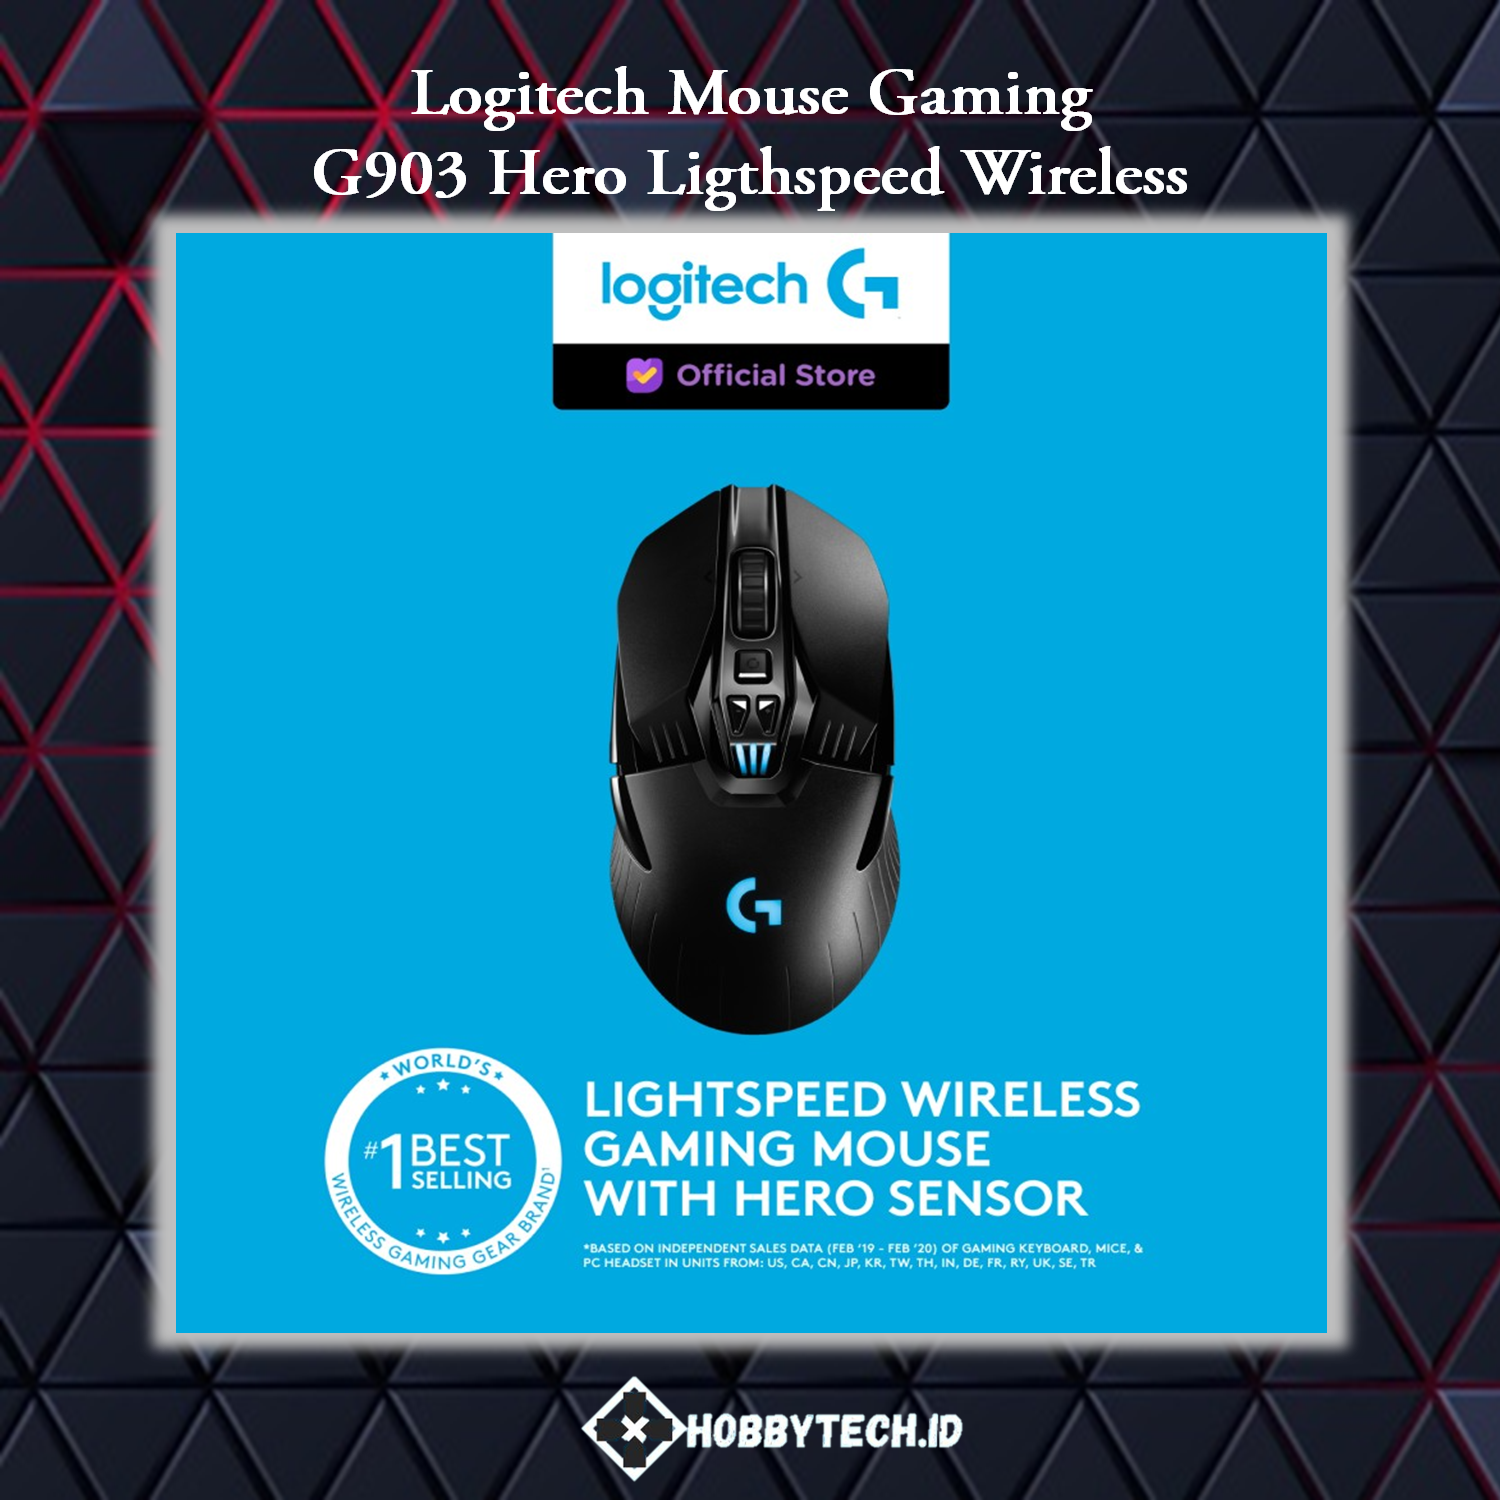 Logitech-G G903 HERO Lightspeed Wireless Gaming Mouse